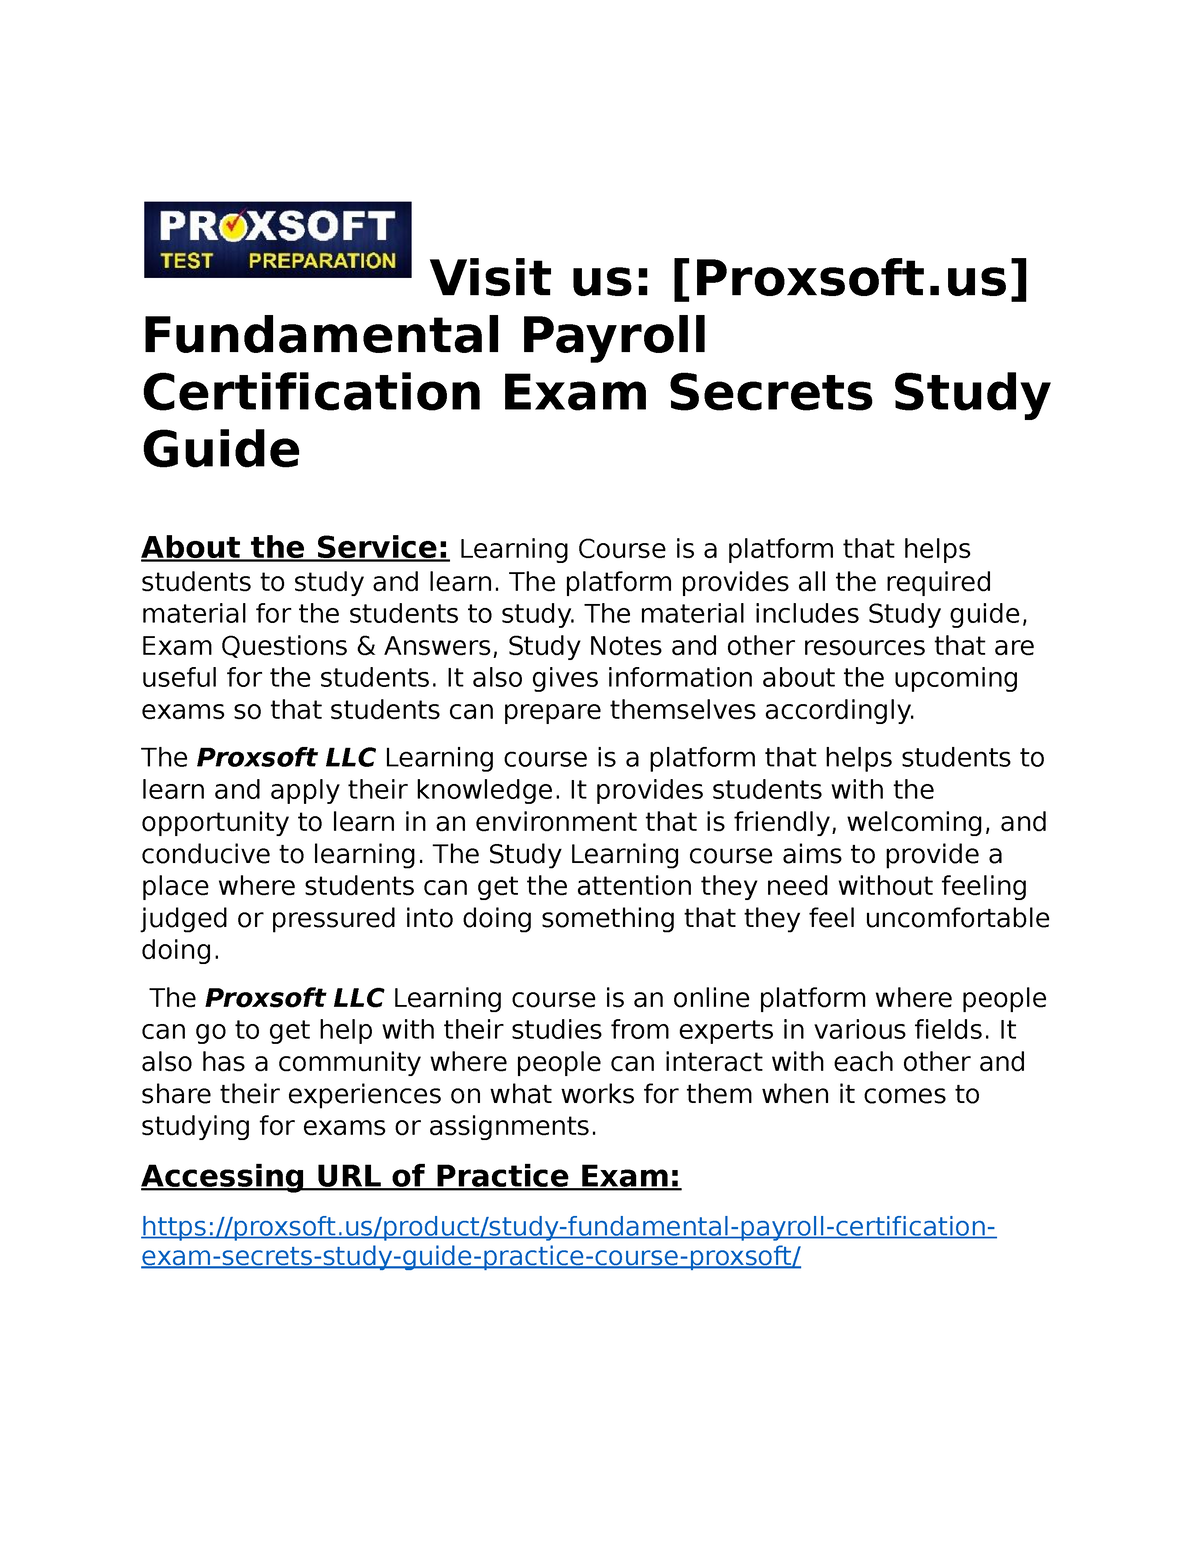 Get Fundamental Payroll Certification Exam Secrets Study Guide Practice